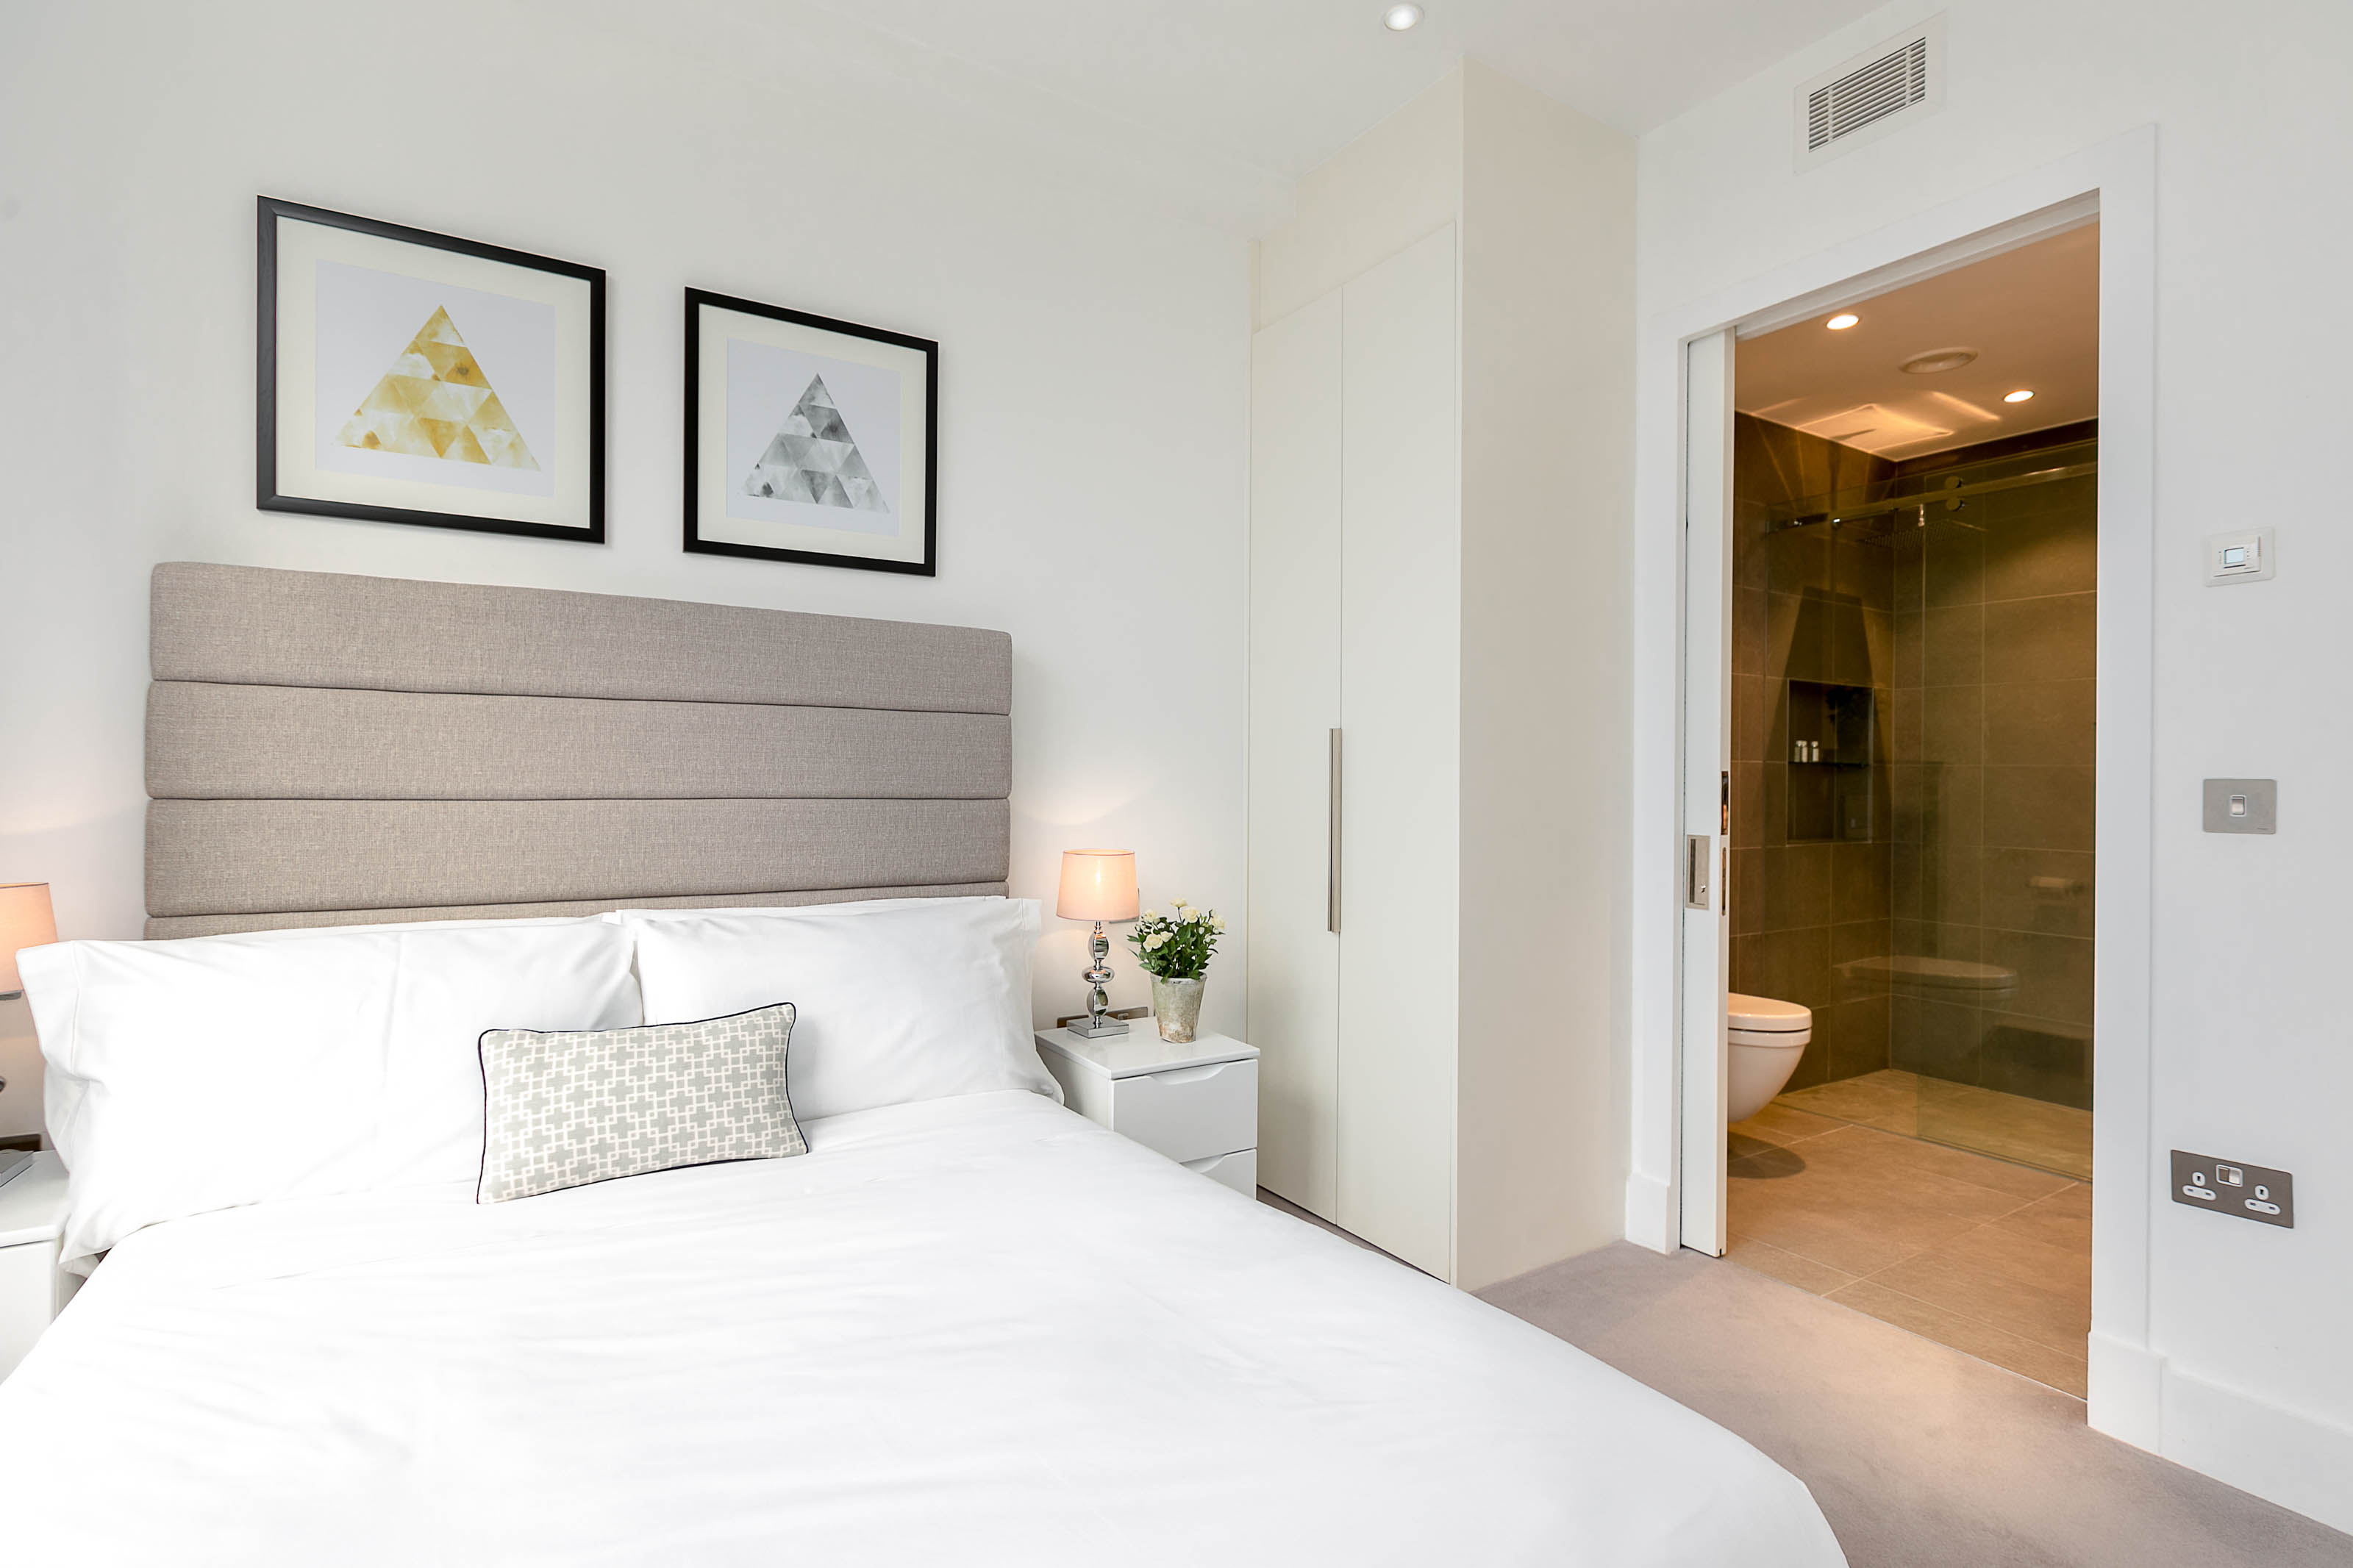 Lovelydays luxury service apartment rental - London - Covent Garden - Prince's House 605 - Lovelysuite - 2 bedrooms - 2 bathrooms - Double bed - 43d57da18574 - Lovelydays